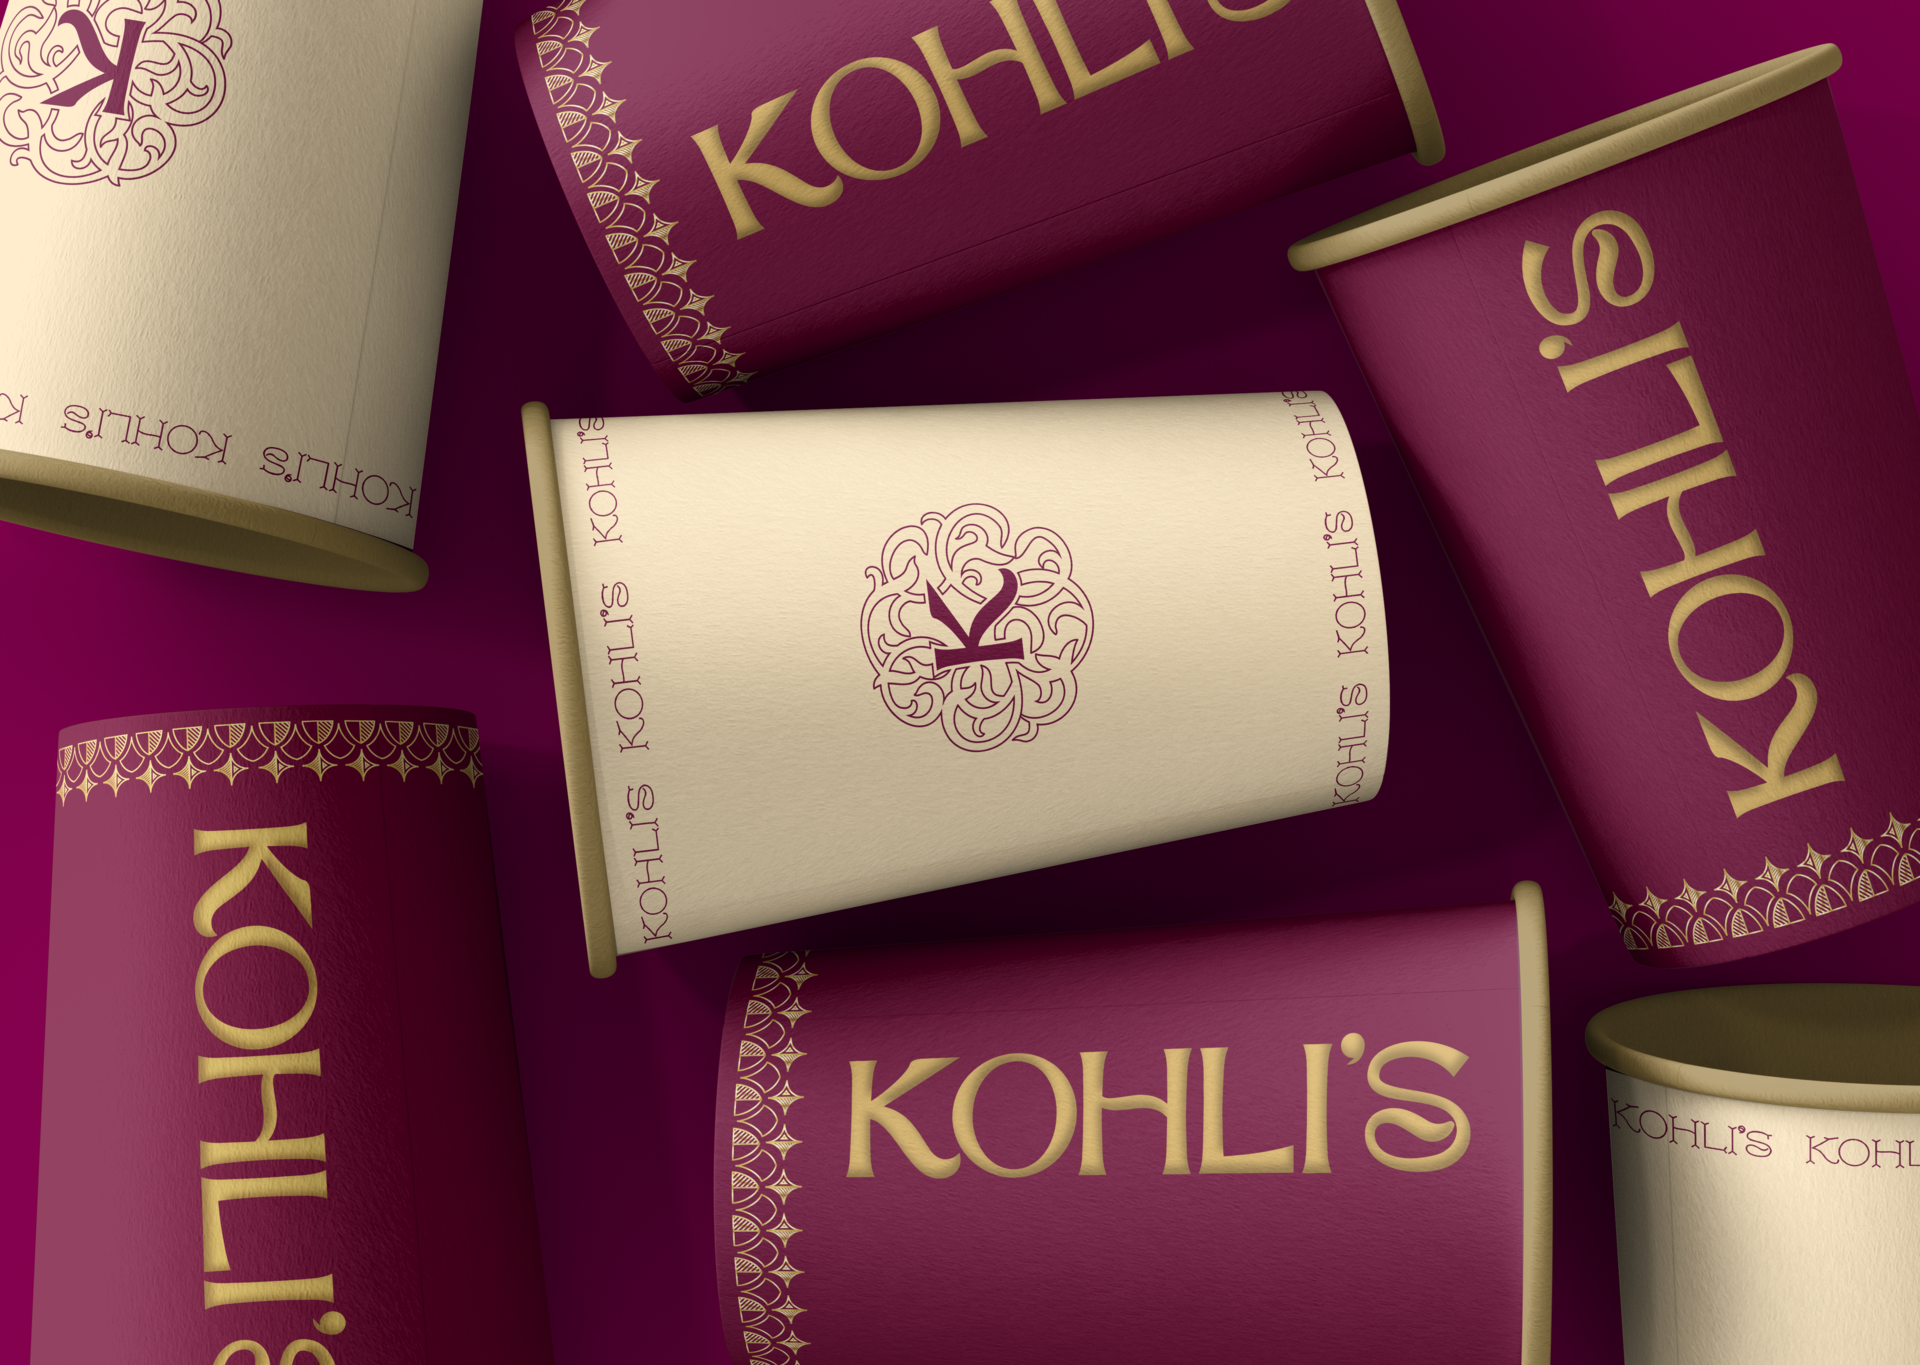 Kohli's Cup Design by Vowels